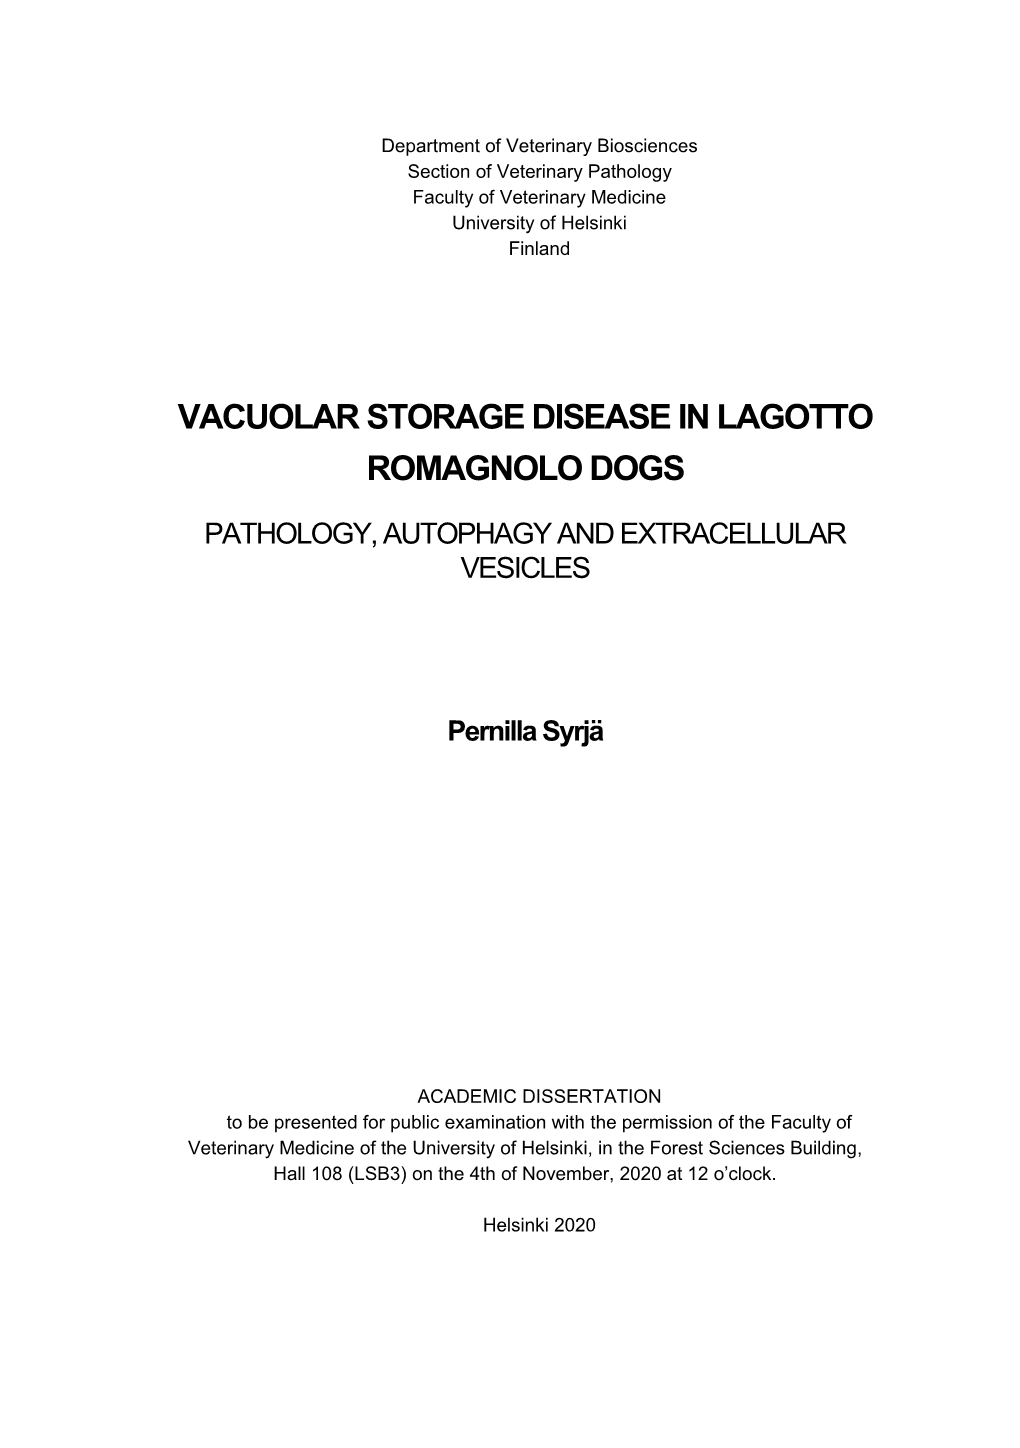 Vacuolar Storage Disease in Lagotto Romagnolo Dogs